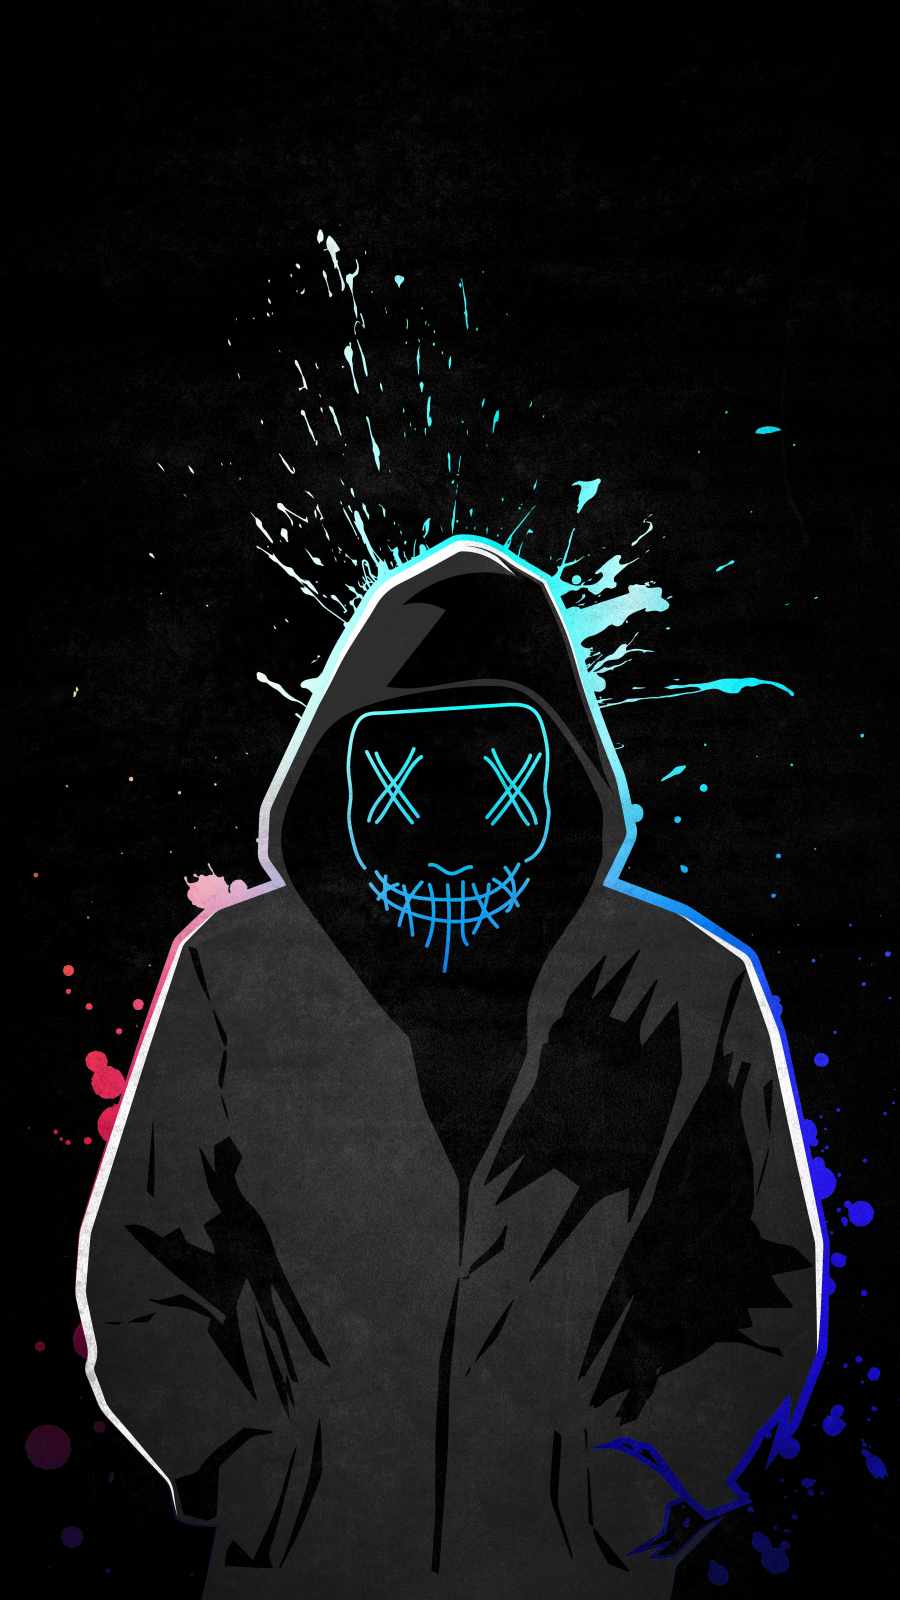 Neon Mask Hoodie Guy iPhone Wallpaper